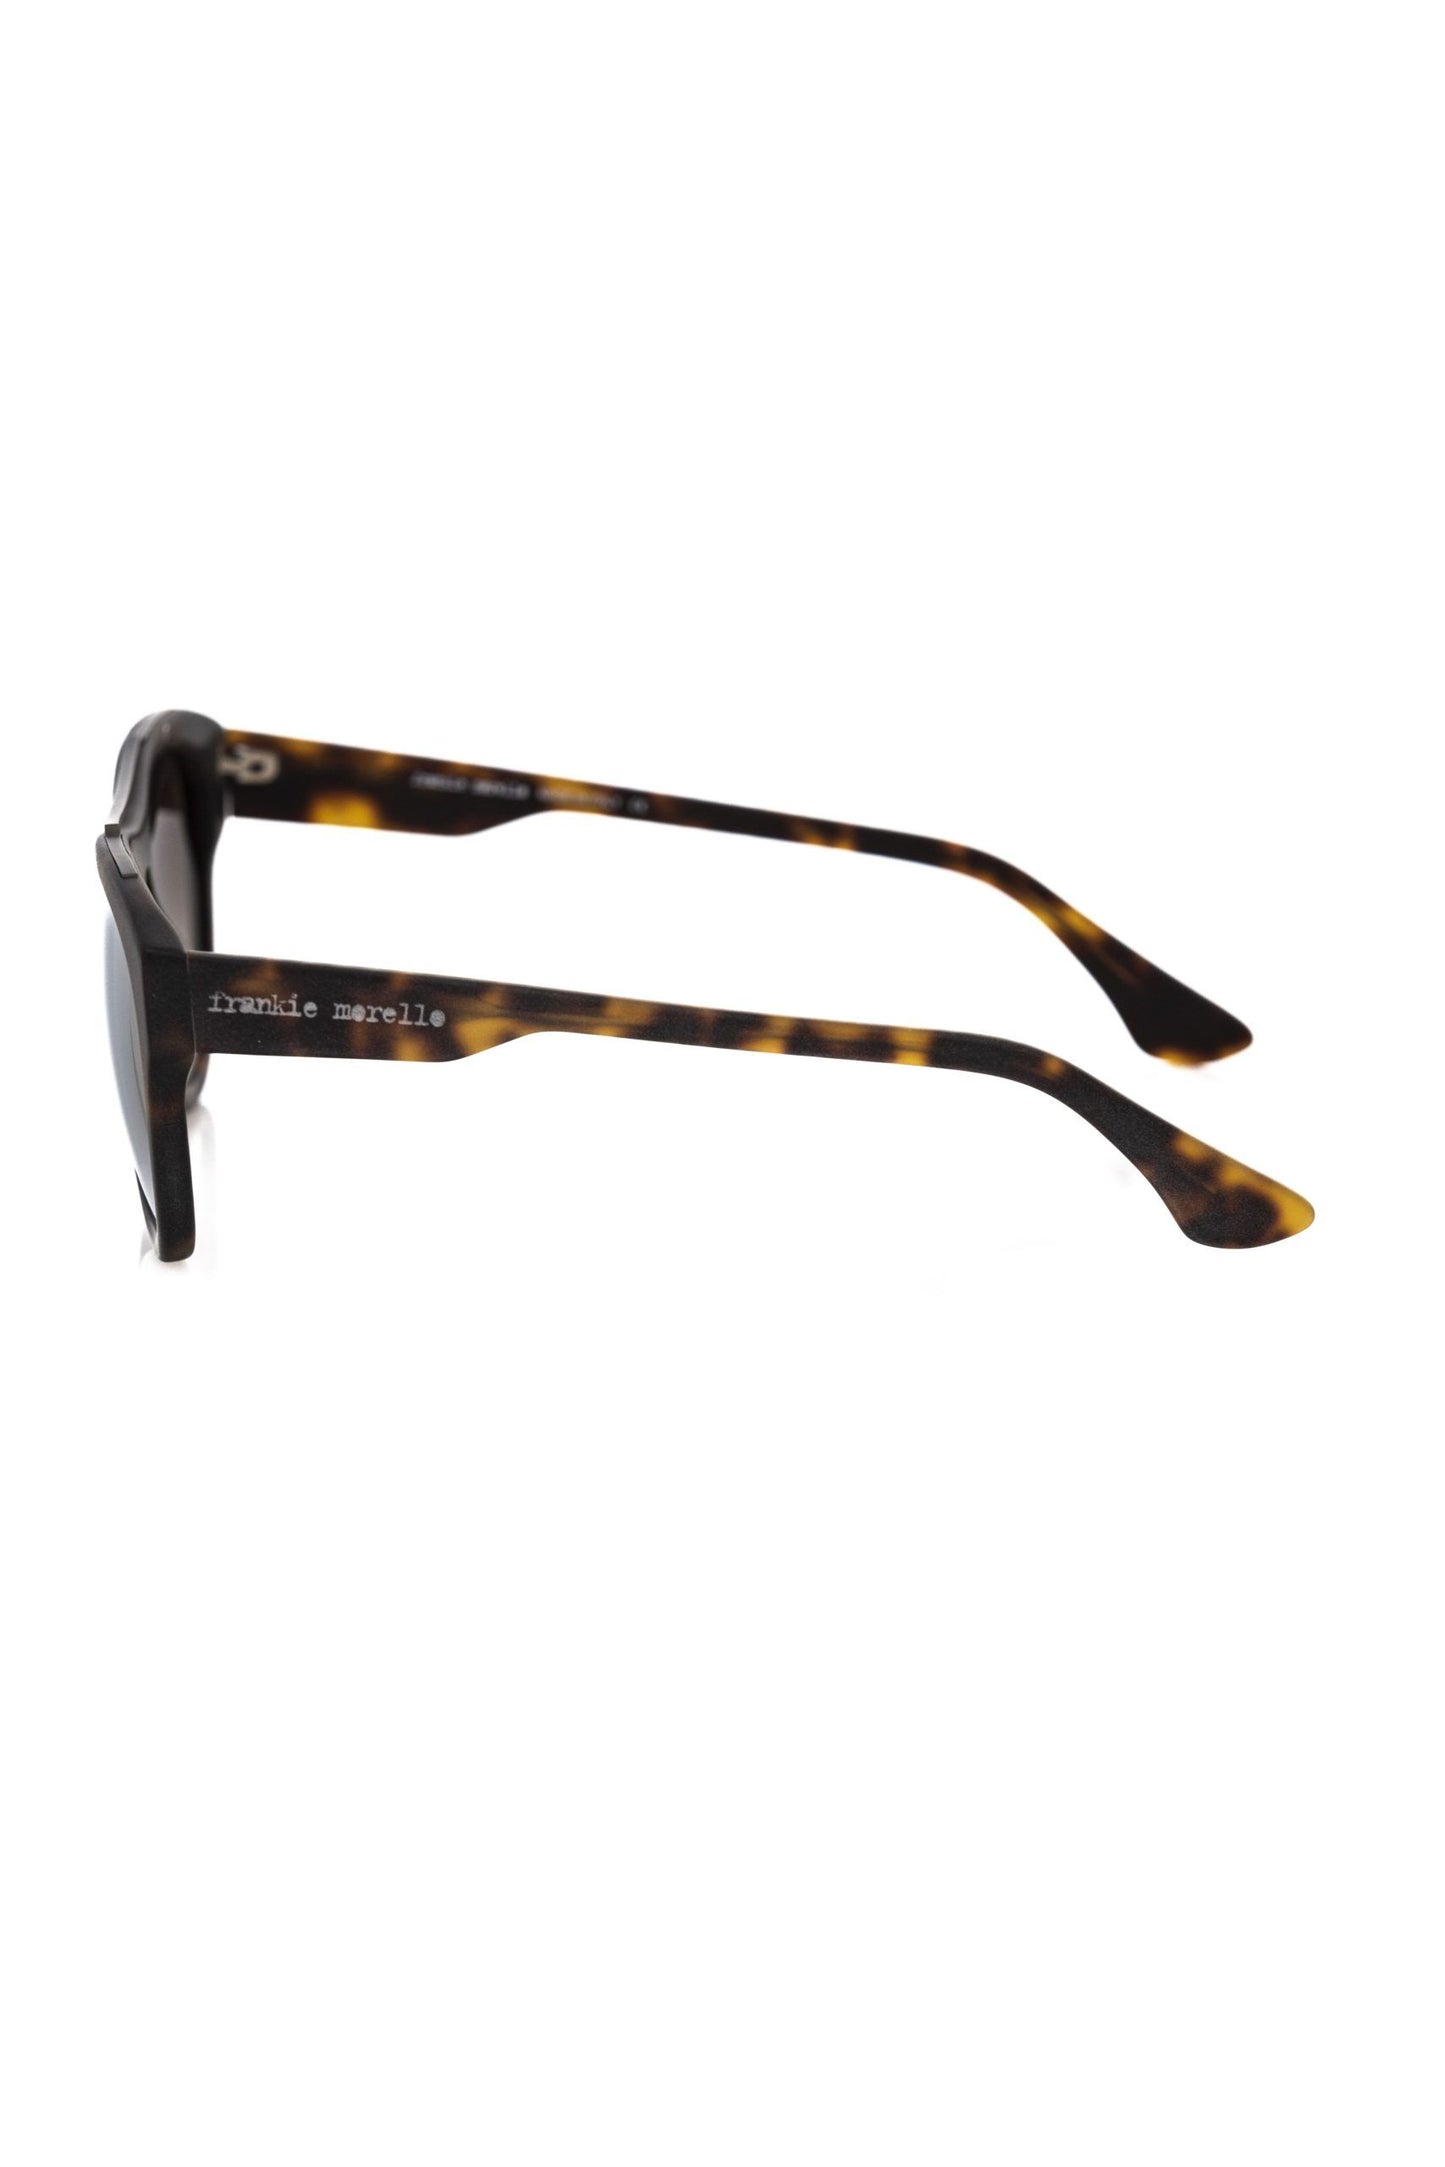 Frankie Morello FRMO-22131 Brown Acetate Sunglasses